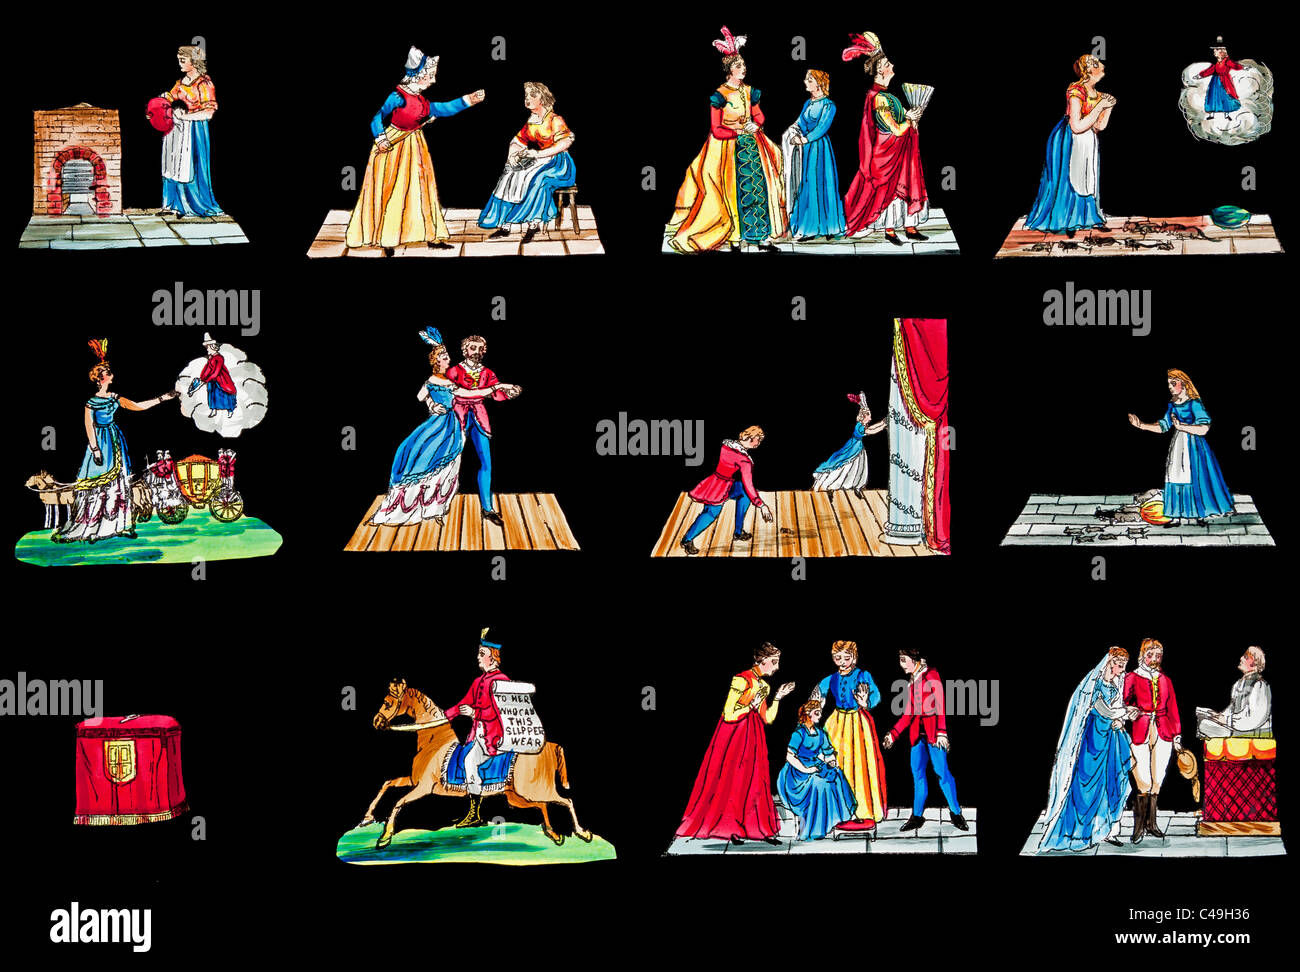 Twelve hand-painted 19th century animated magic lantern slide images depicting the story of Cinderella JMH4967 Stock Photo